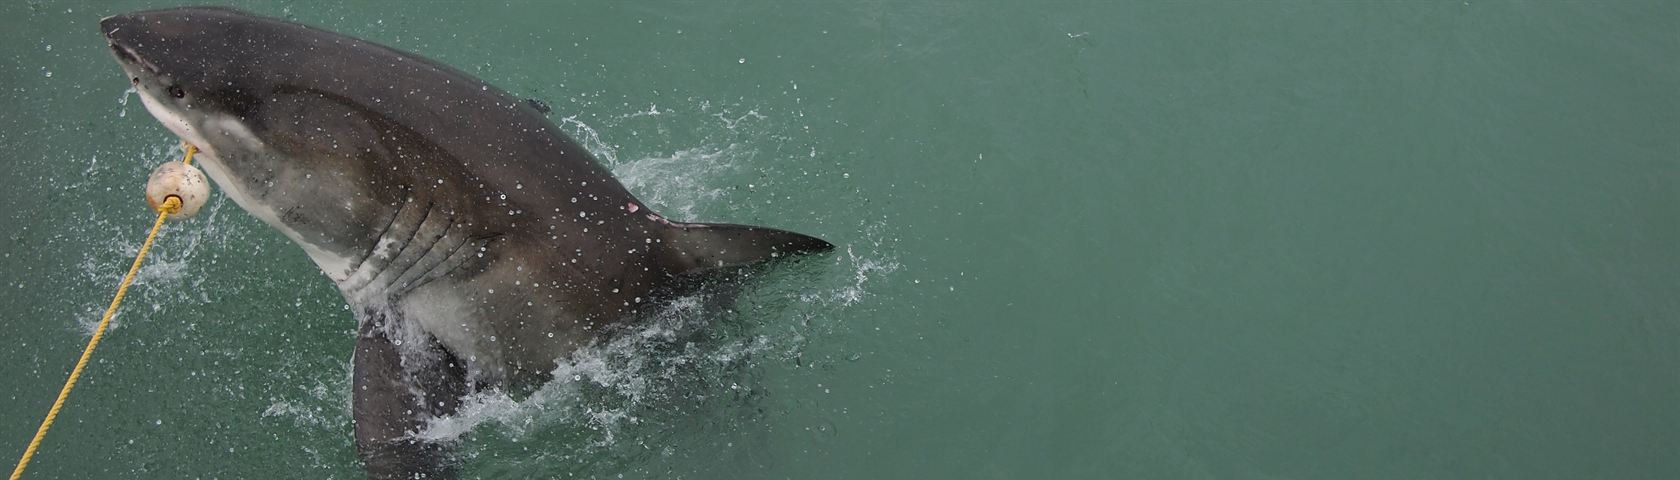 Great White Shark at Gans Baai, South Africa